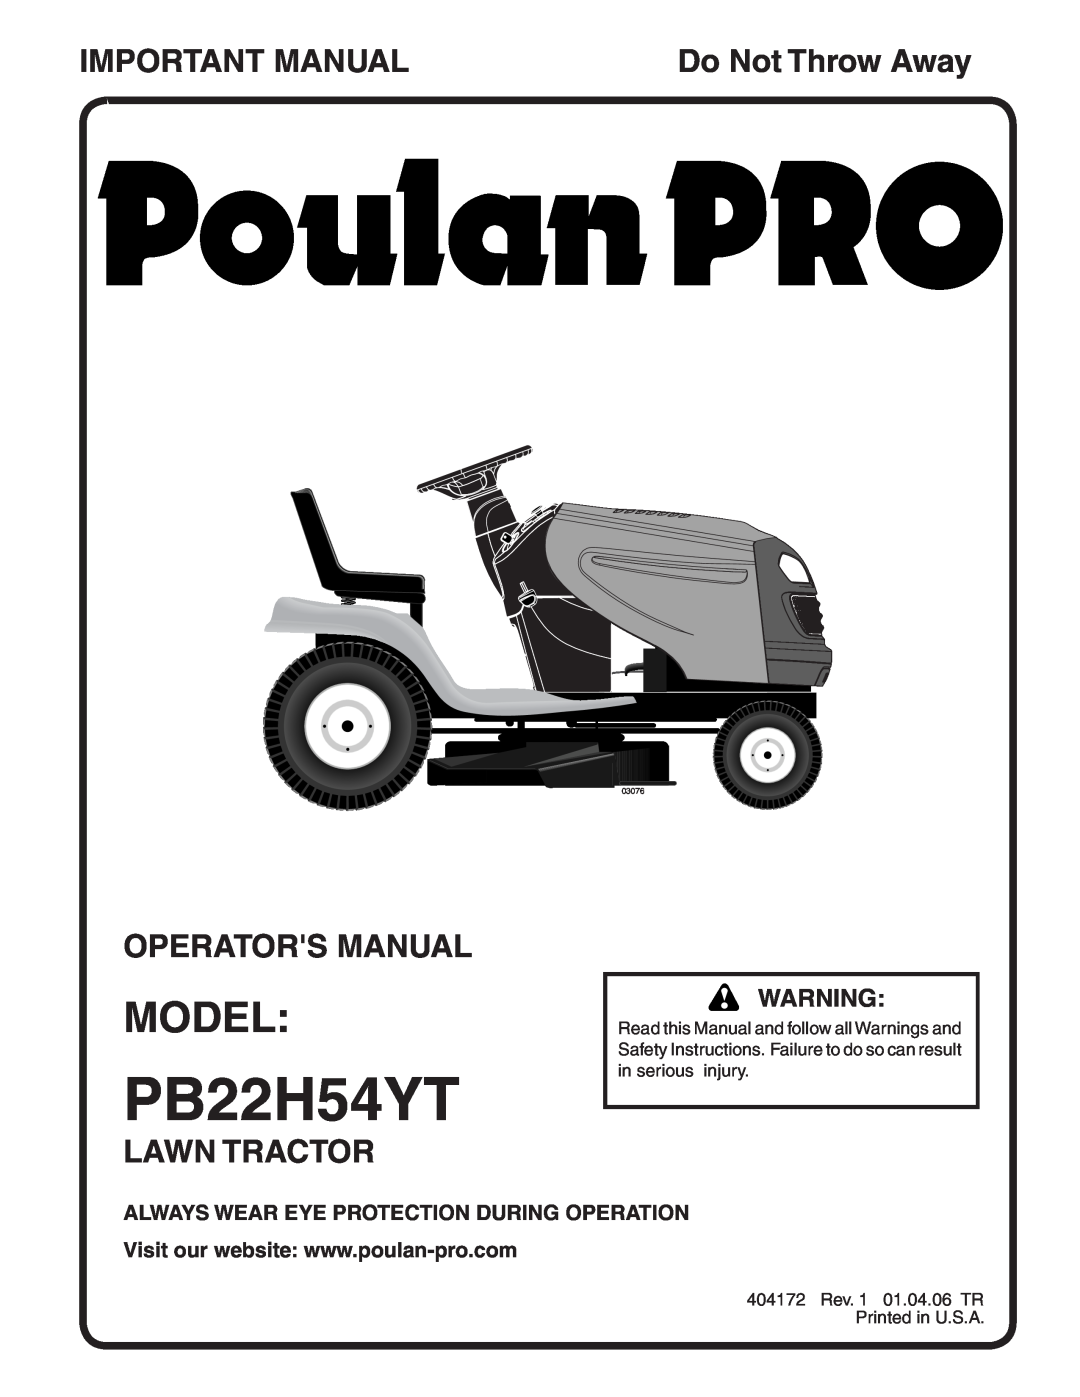 Poulan PB22H54YT manual Model, Important Manual, Operators Manual, Lawn Tractor, Do Not Throw Away, 03076 